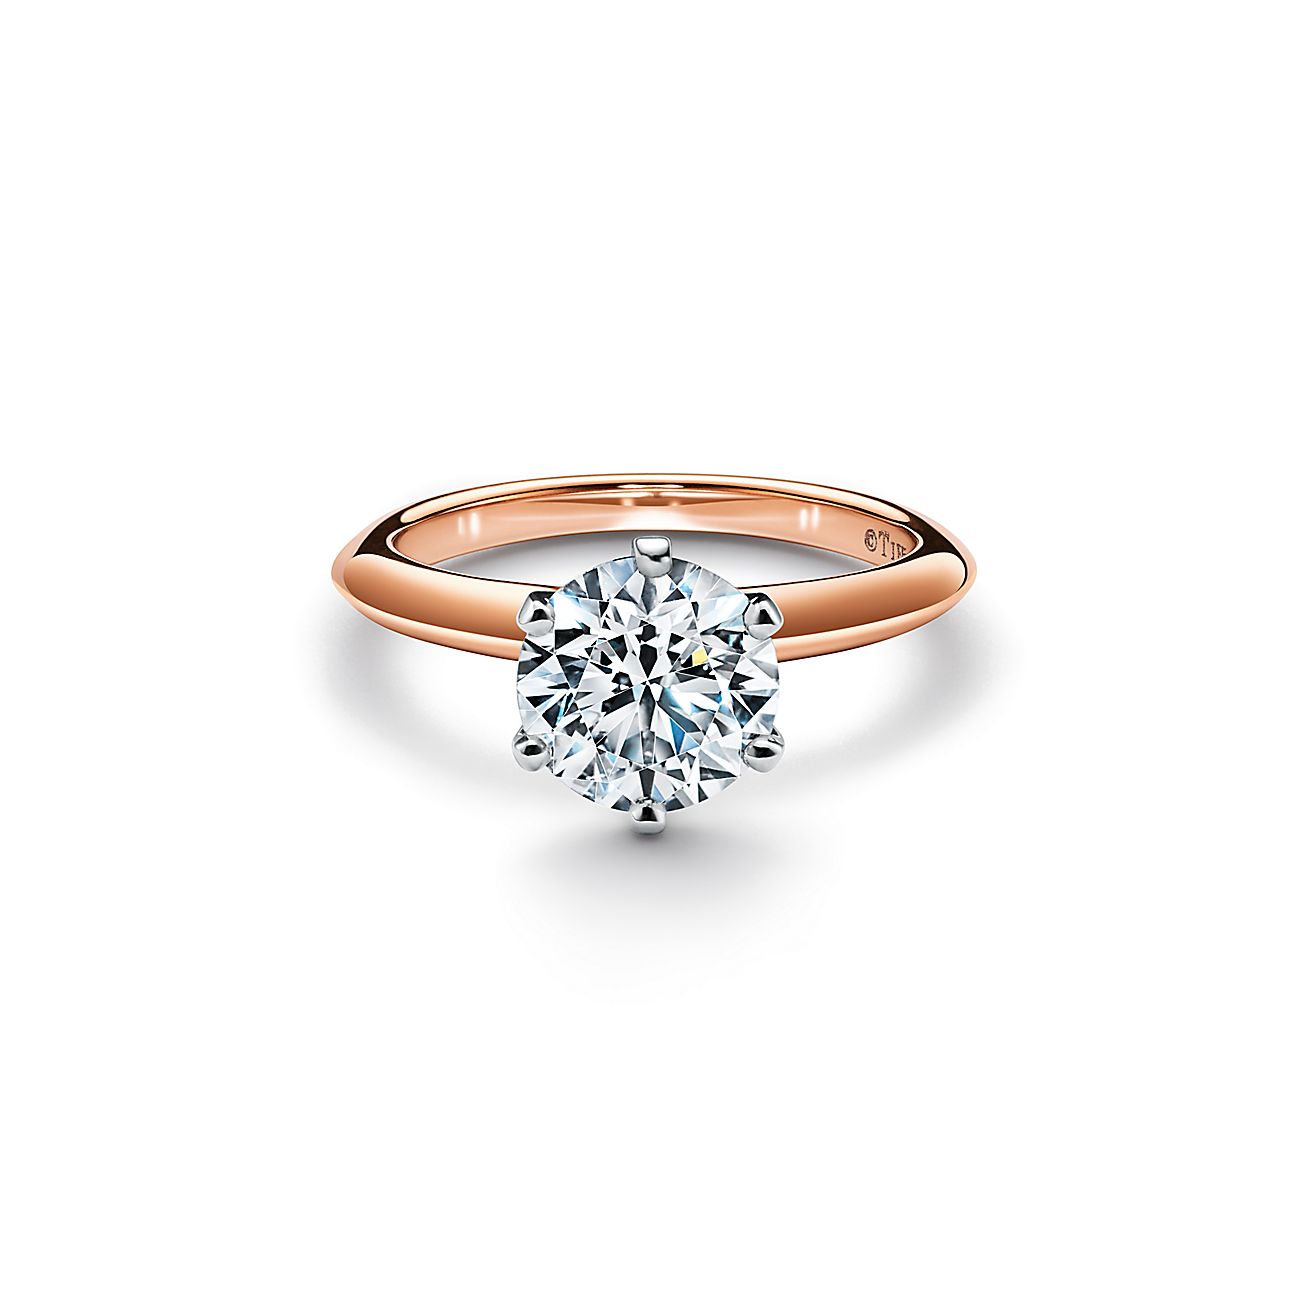 Horno aritmética confirmar El anillo de compromiso Tiffany® Setting en oro rosa de 18 quilates